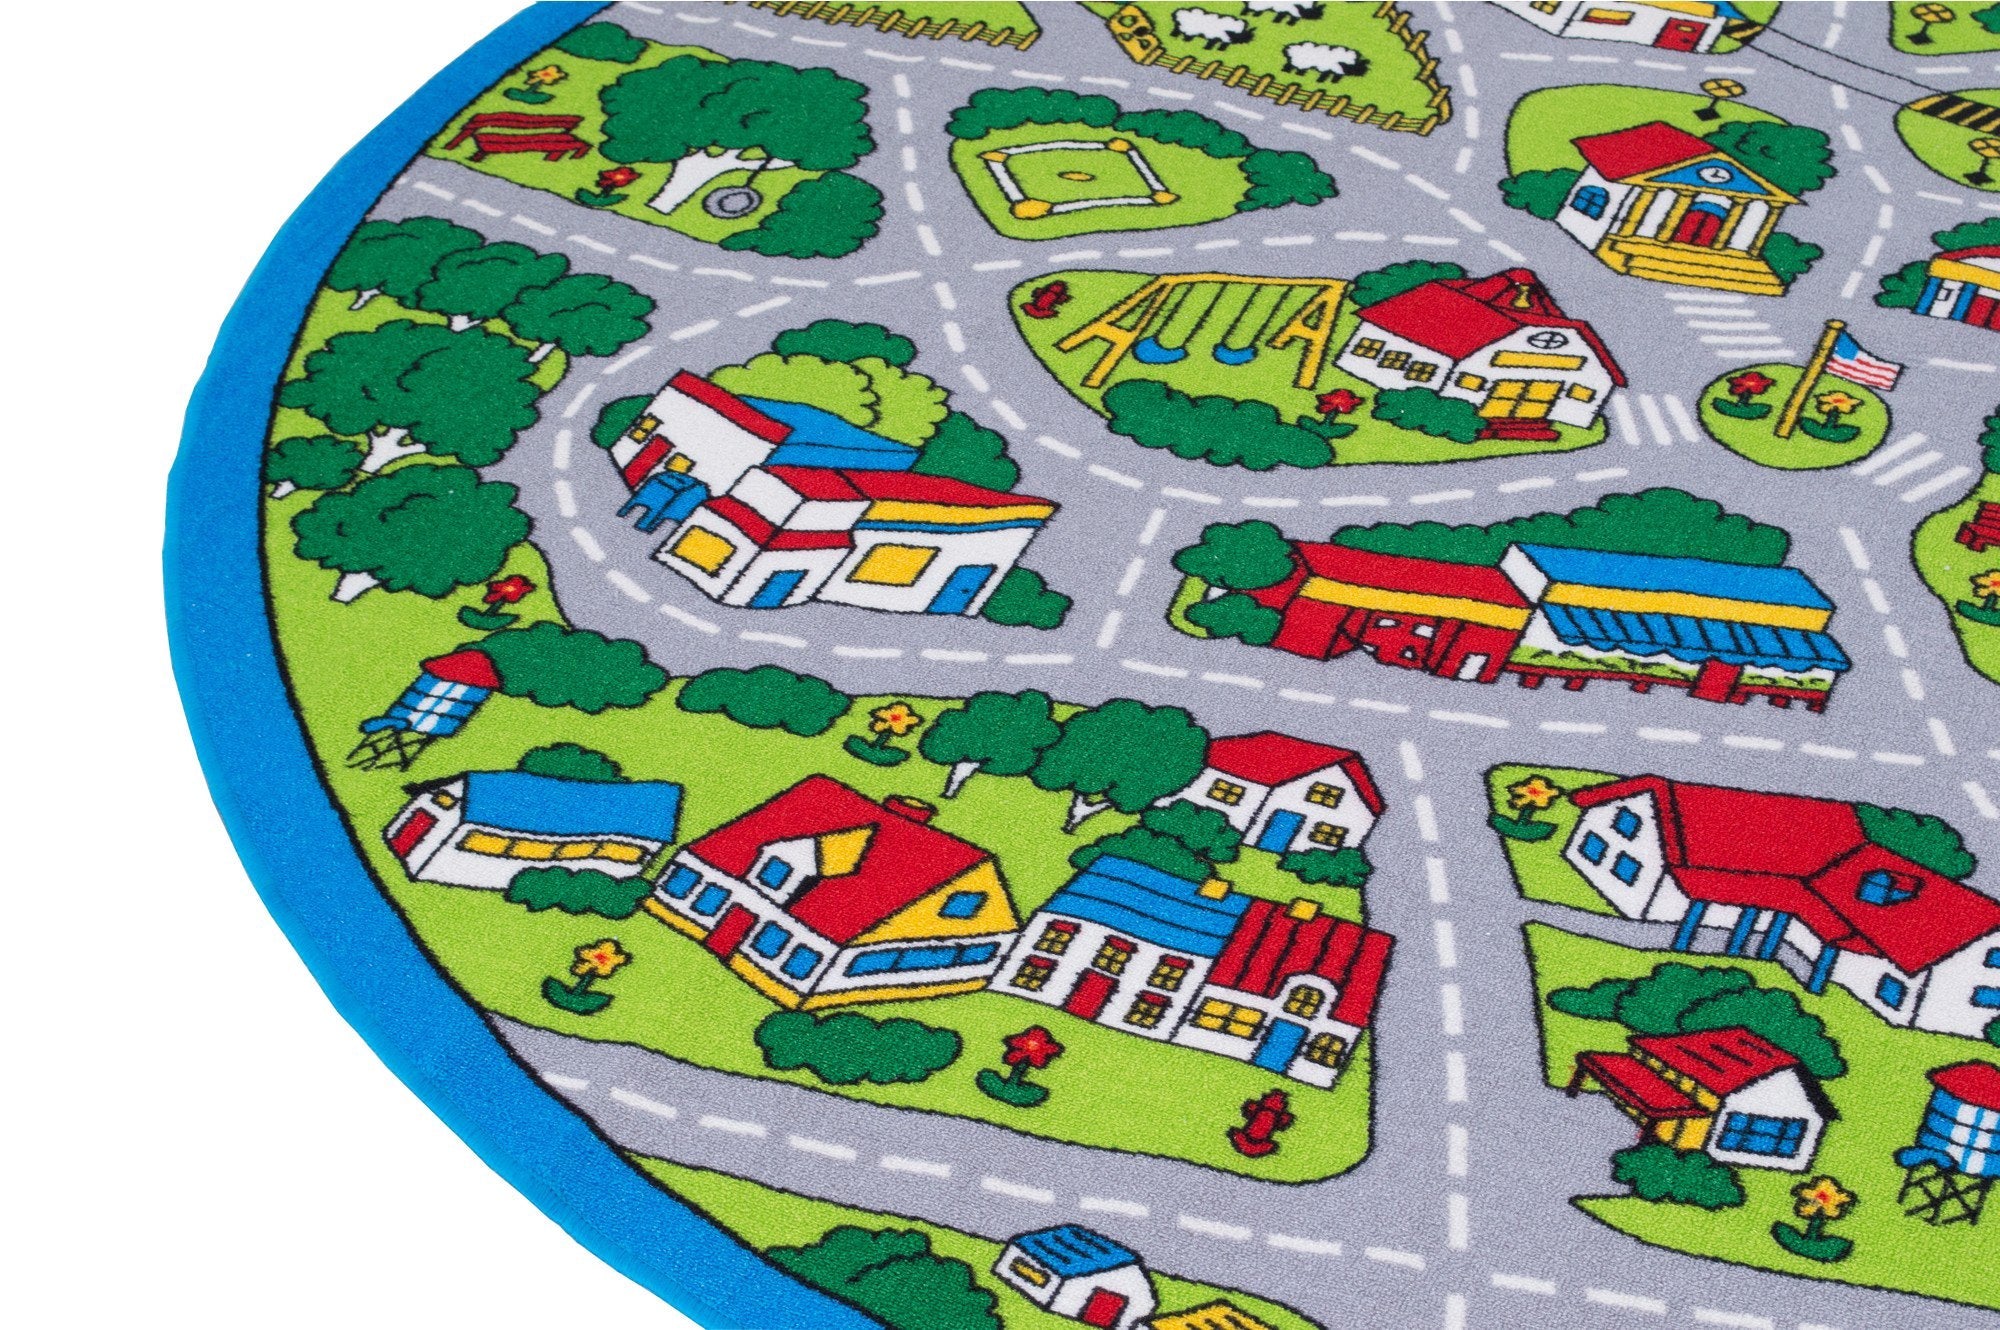 Kids Car Road Rugs City Map Play mat Non-Slip